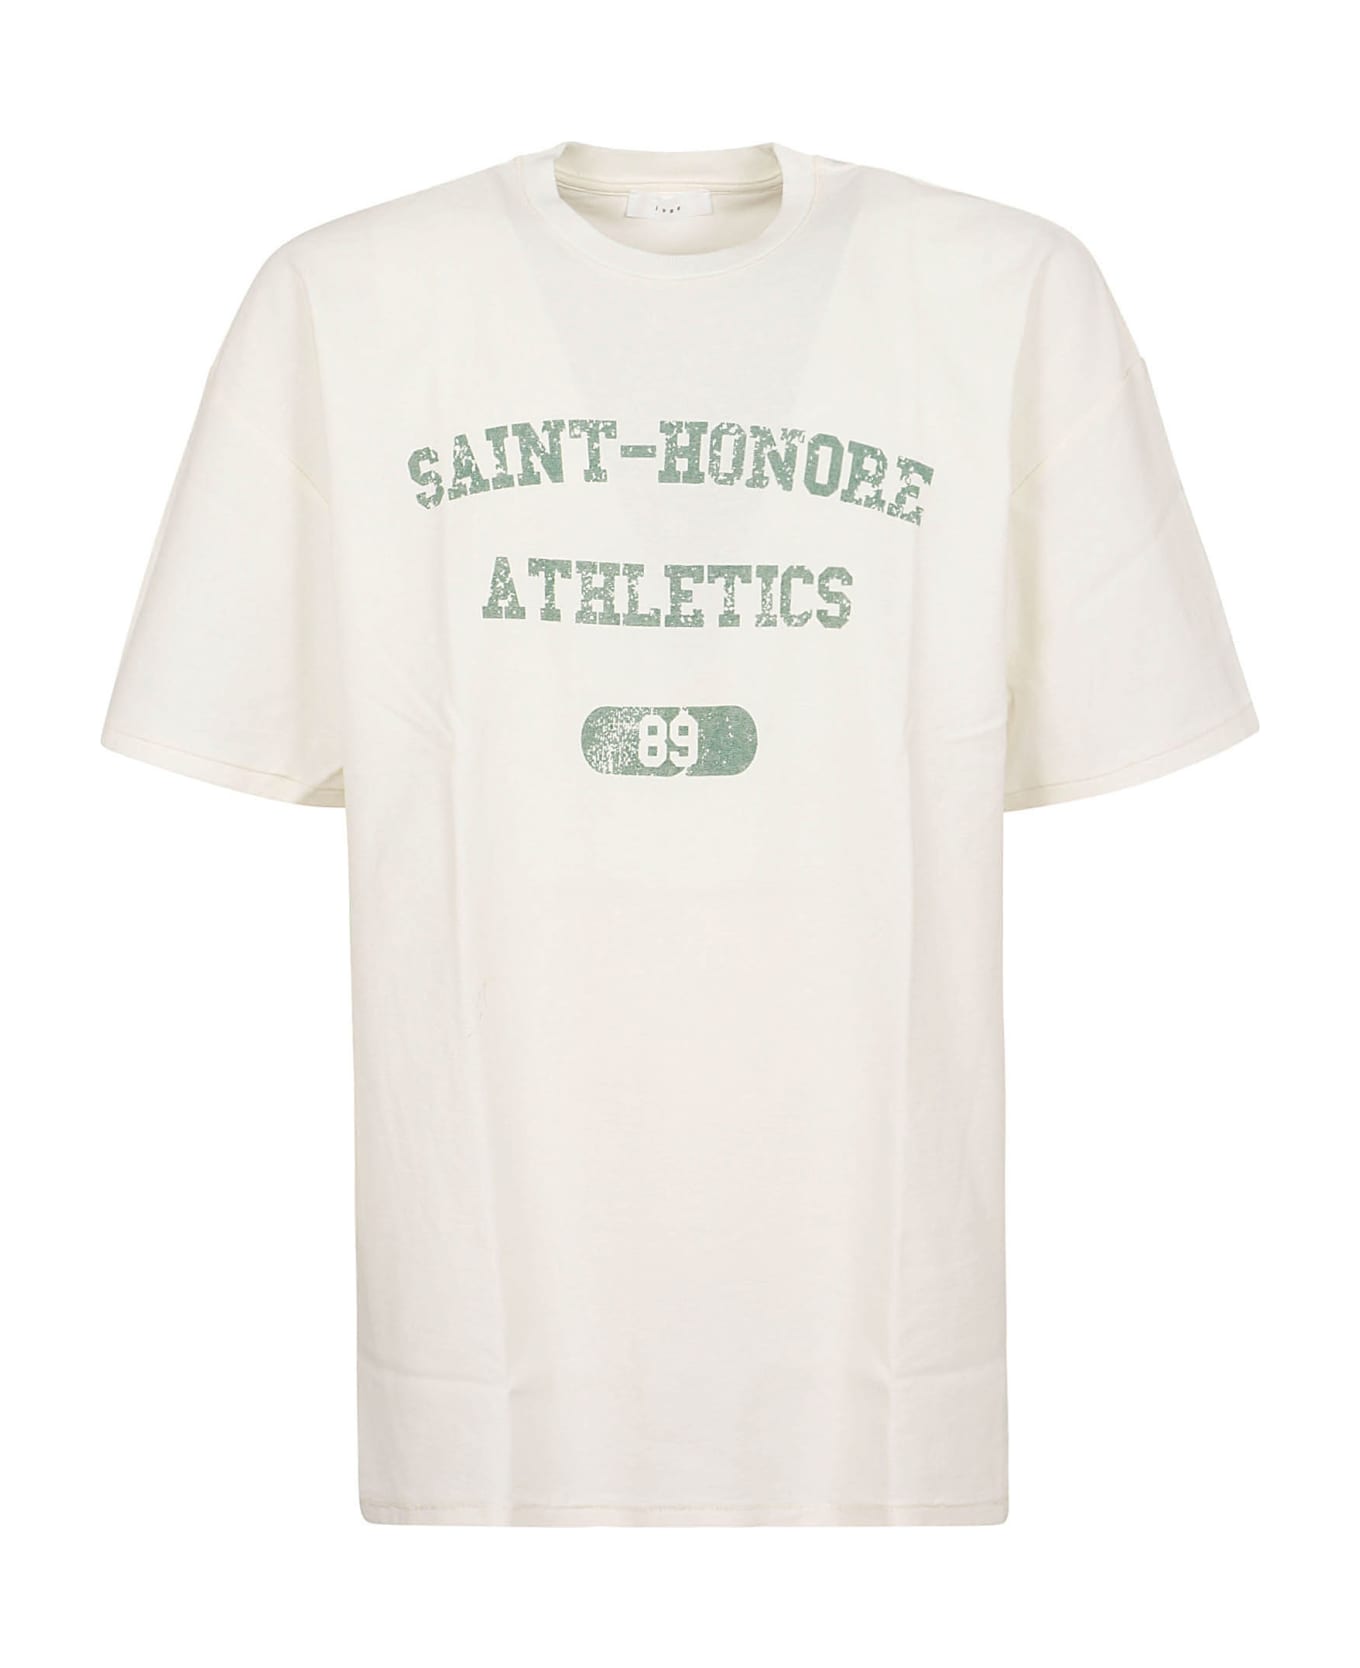 1989 Studio Saint Honore Athletics T-shirt - Vintage White